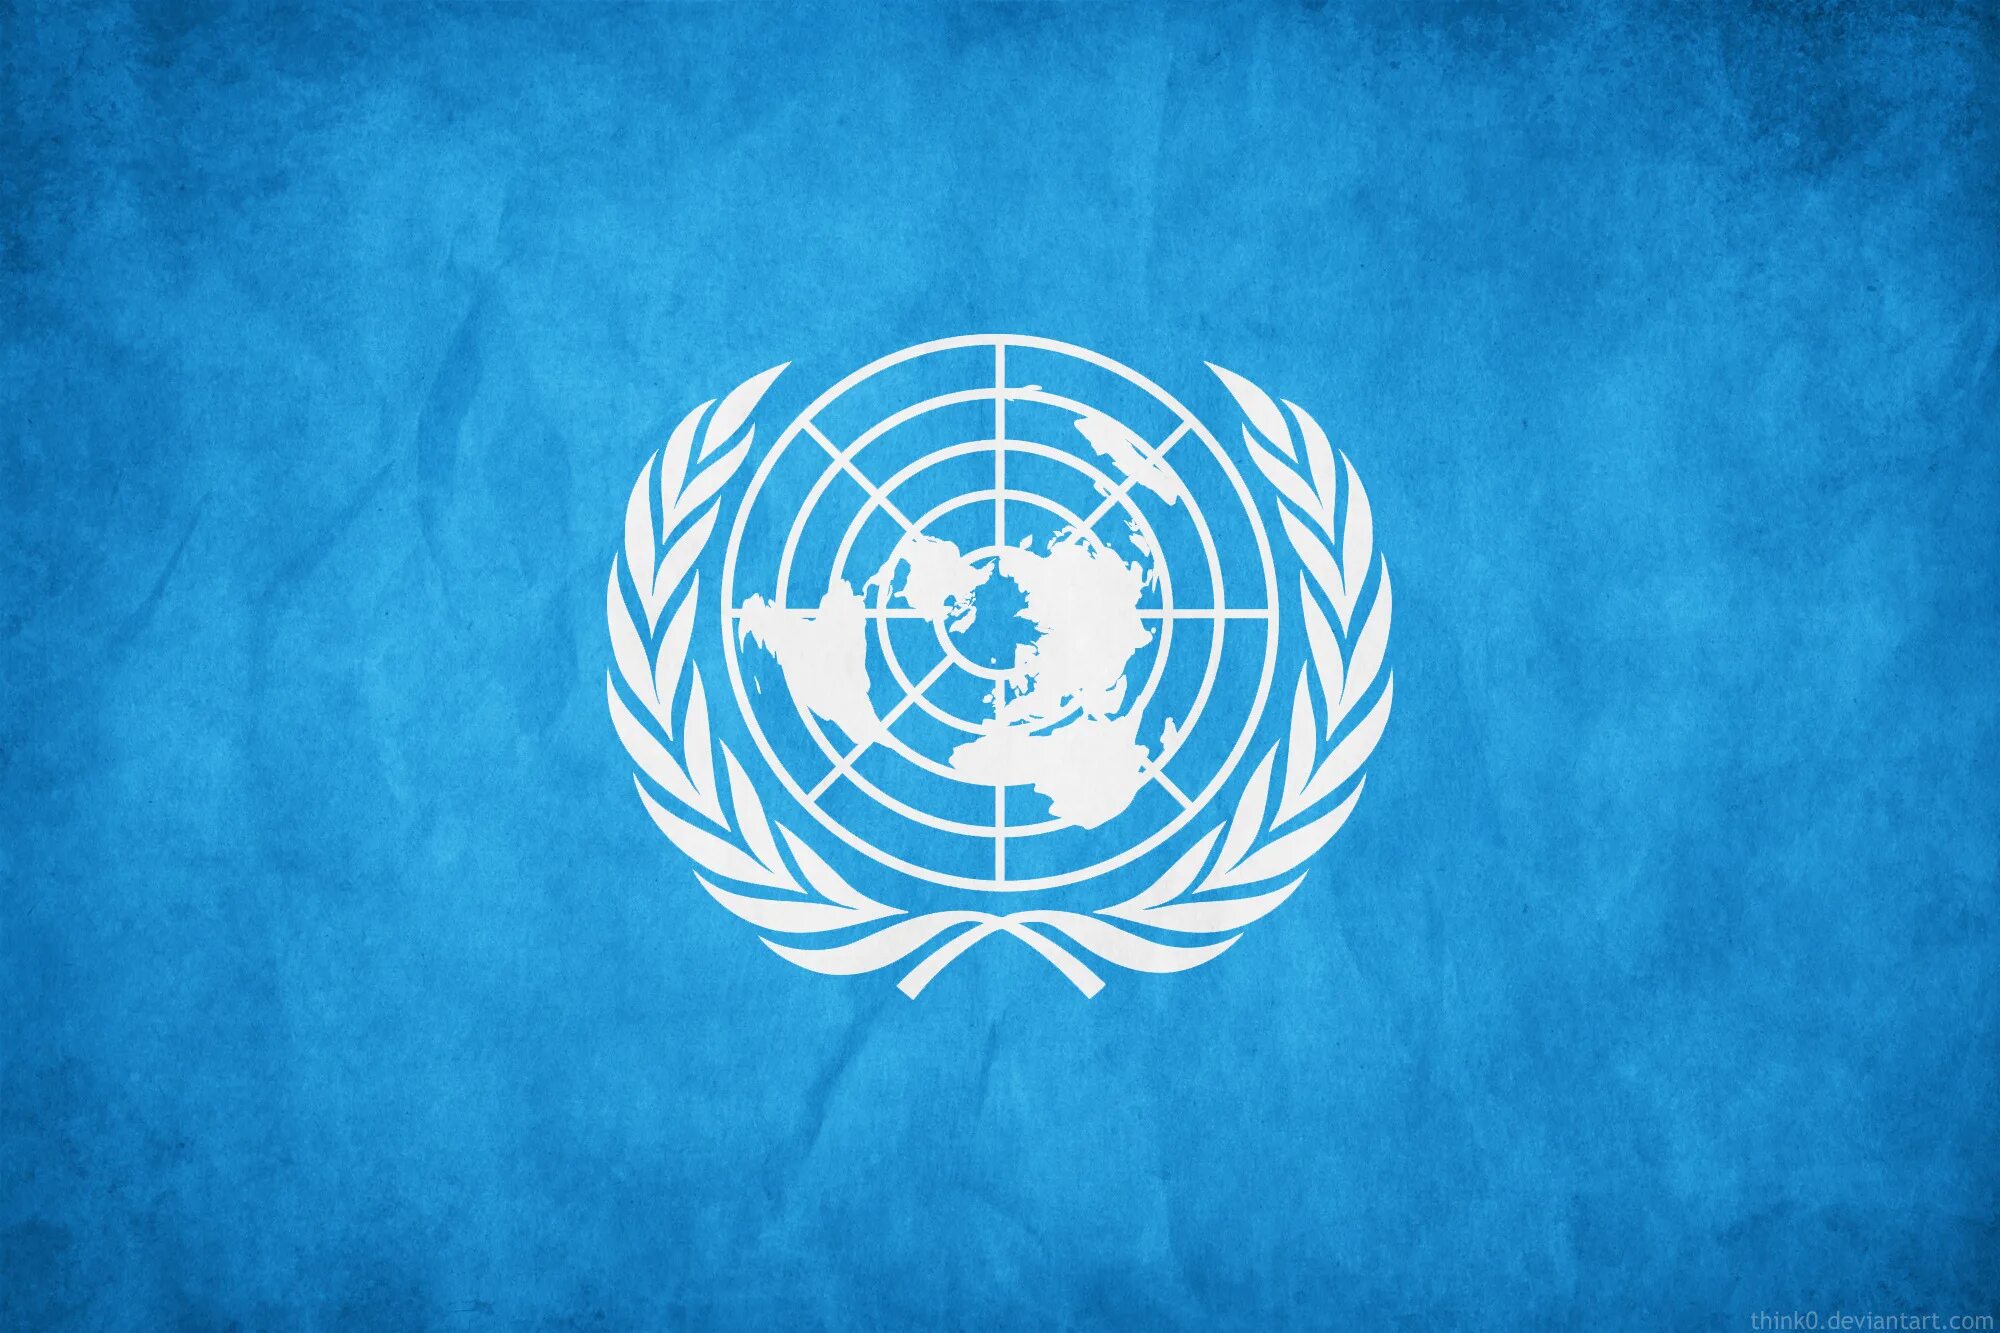 Образ оон. Флаг миротворческих сил ООН. Организация Объединенных наций (ООН). Флаг организации Объединенных наций. Организация Объединенных наций ООН флаг.